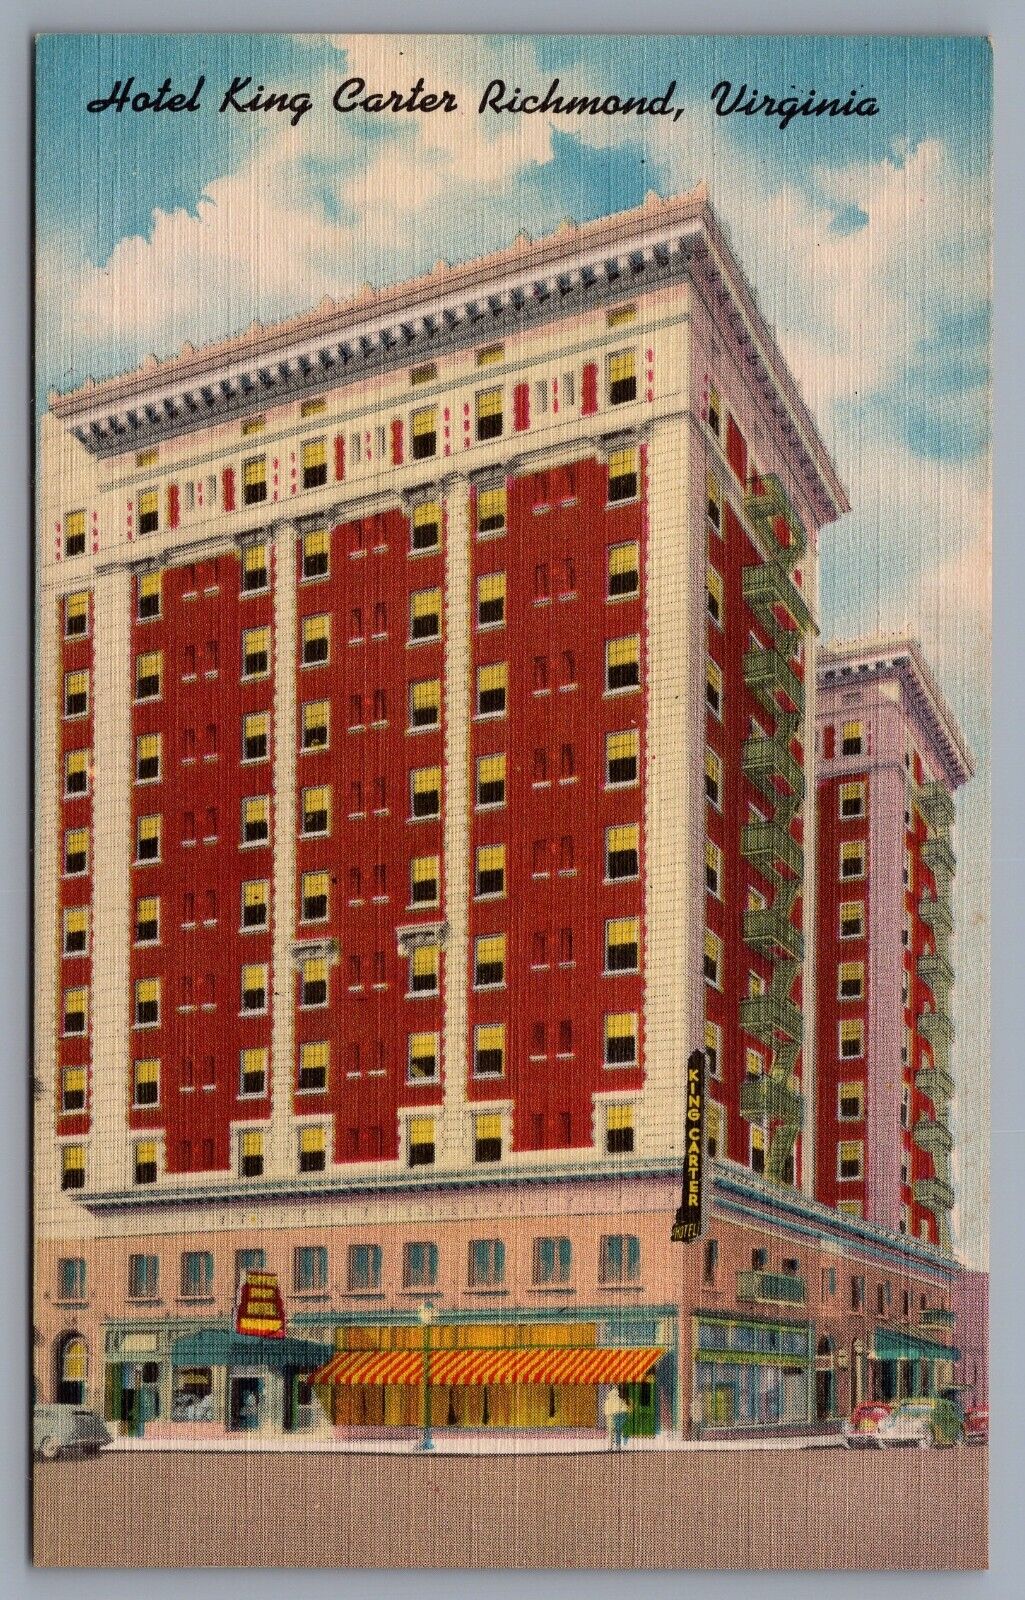 Vtg Hotel King Carter Richmond Virginia Linen Postcard Heart of Richmond